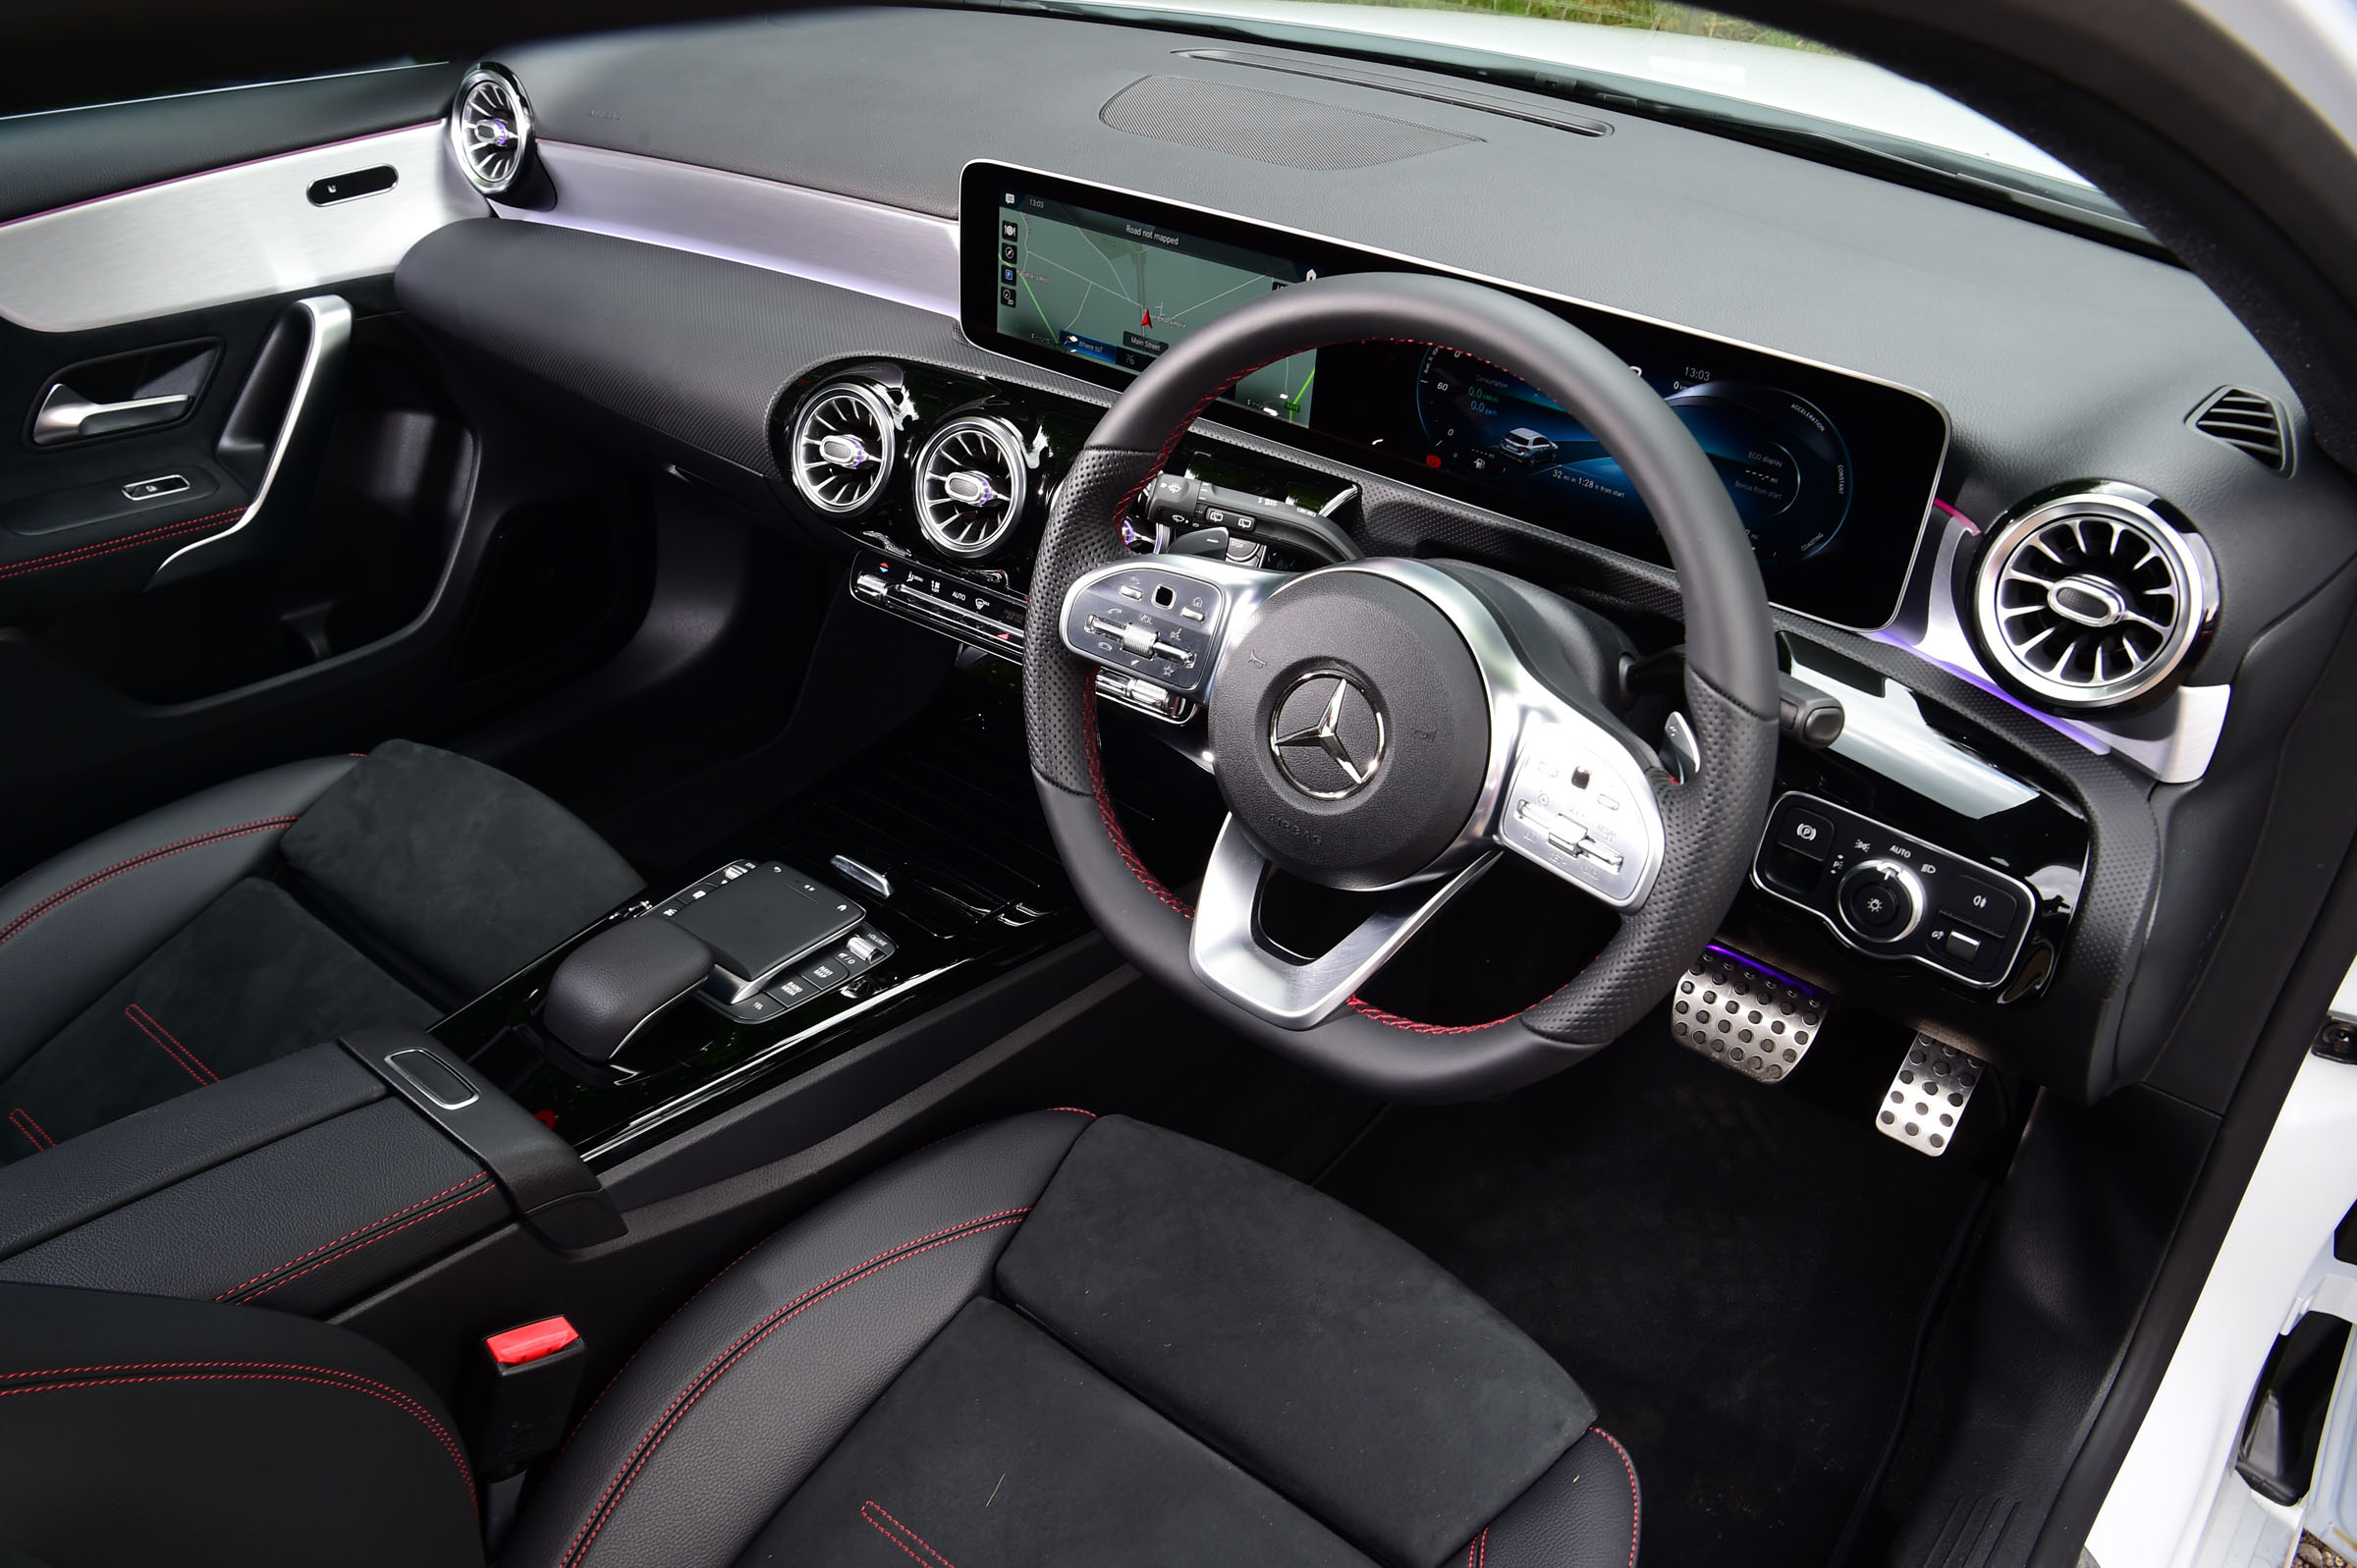 Mercedes A Class Hybrid Interior Comfort Drivingelectric